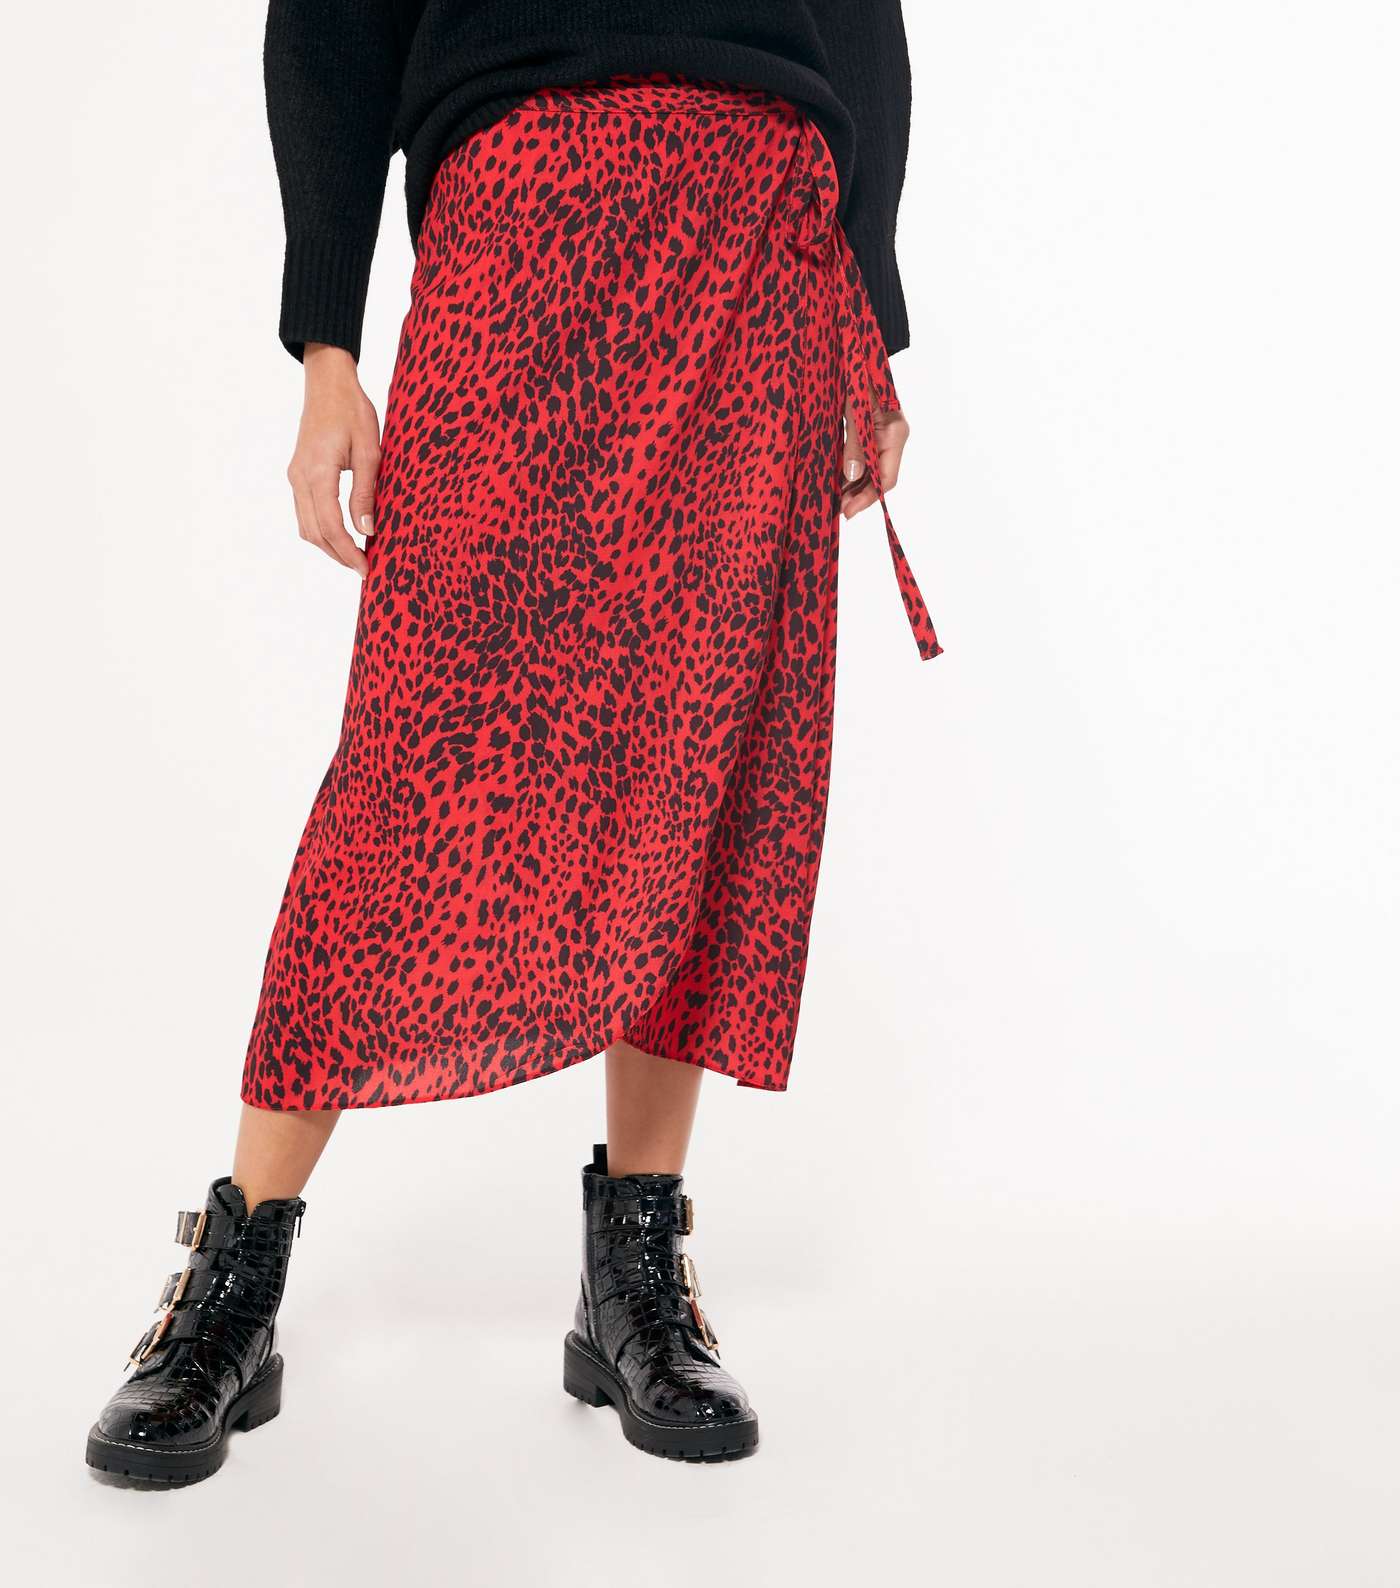 Red Leopard Print Wrap Midi Skirt Image 2